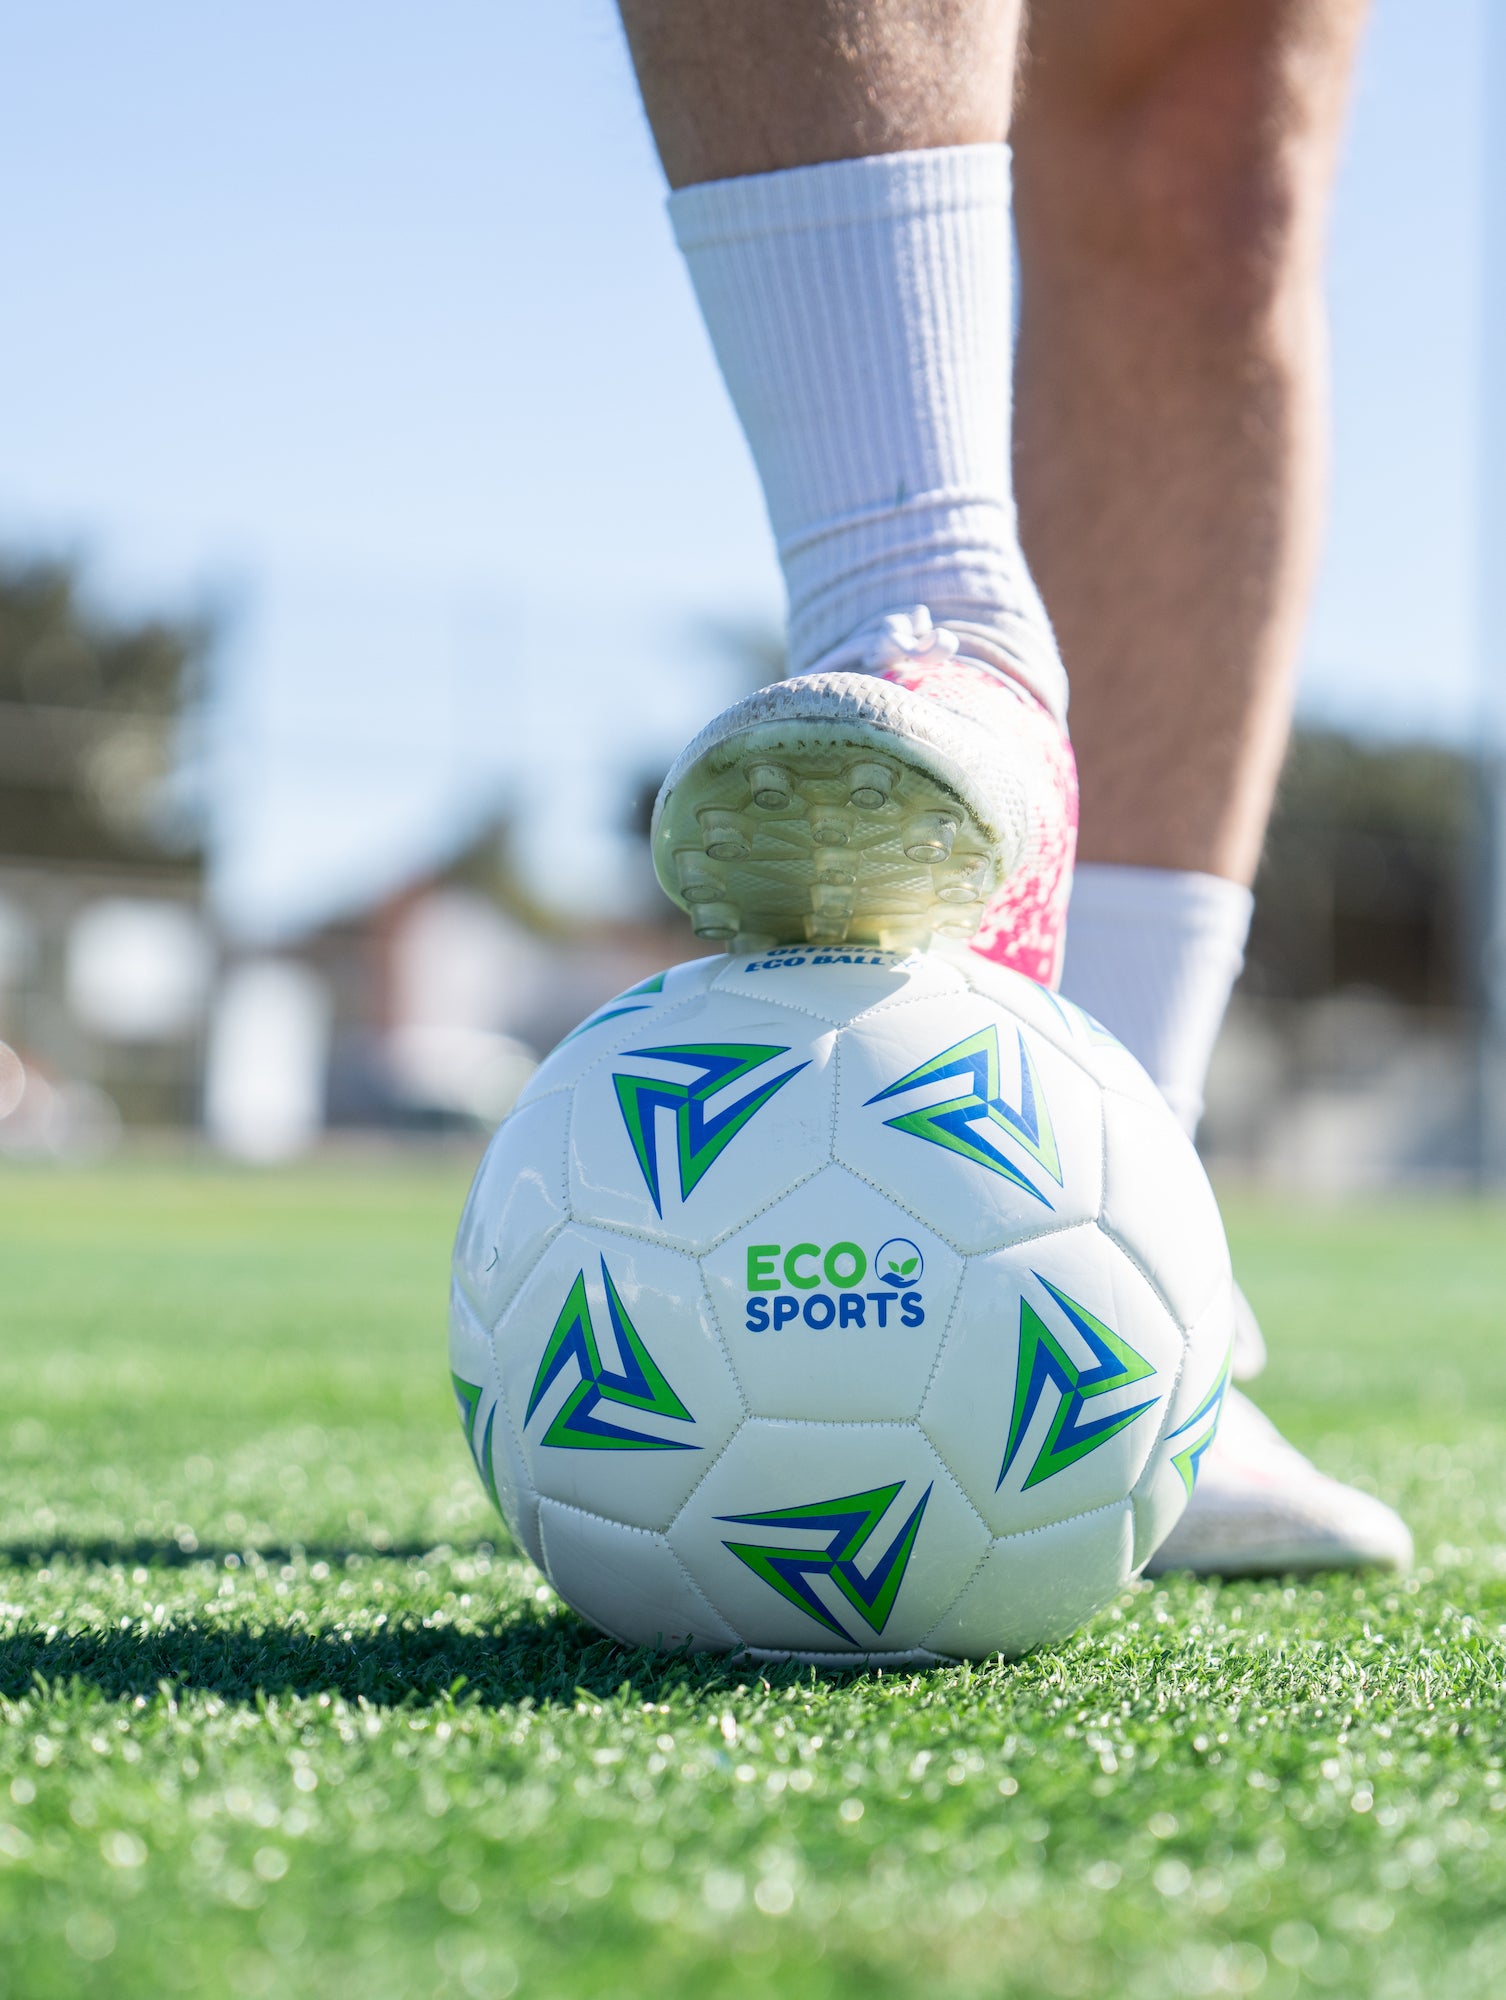 Premium Sports Equipment - Eco Friendly Balls, Paddles, & Vegan Gear